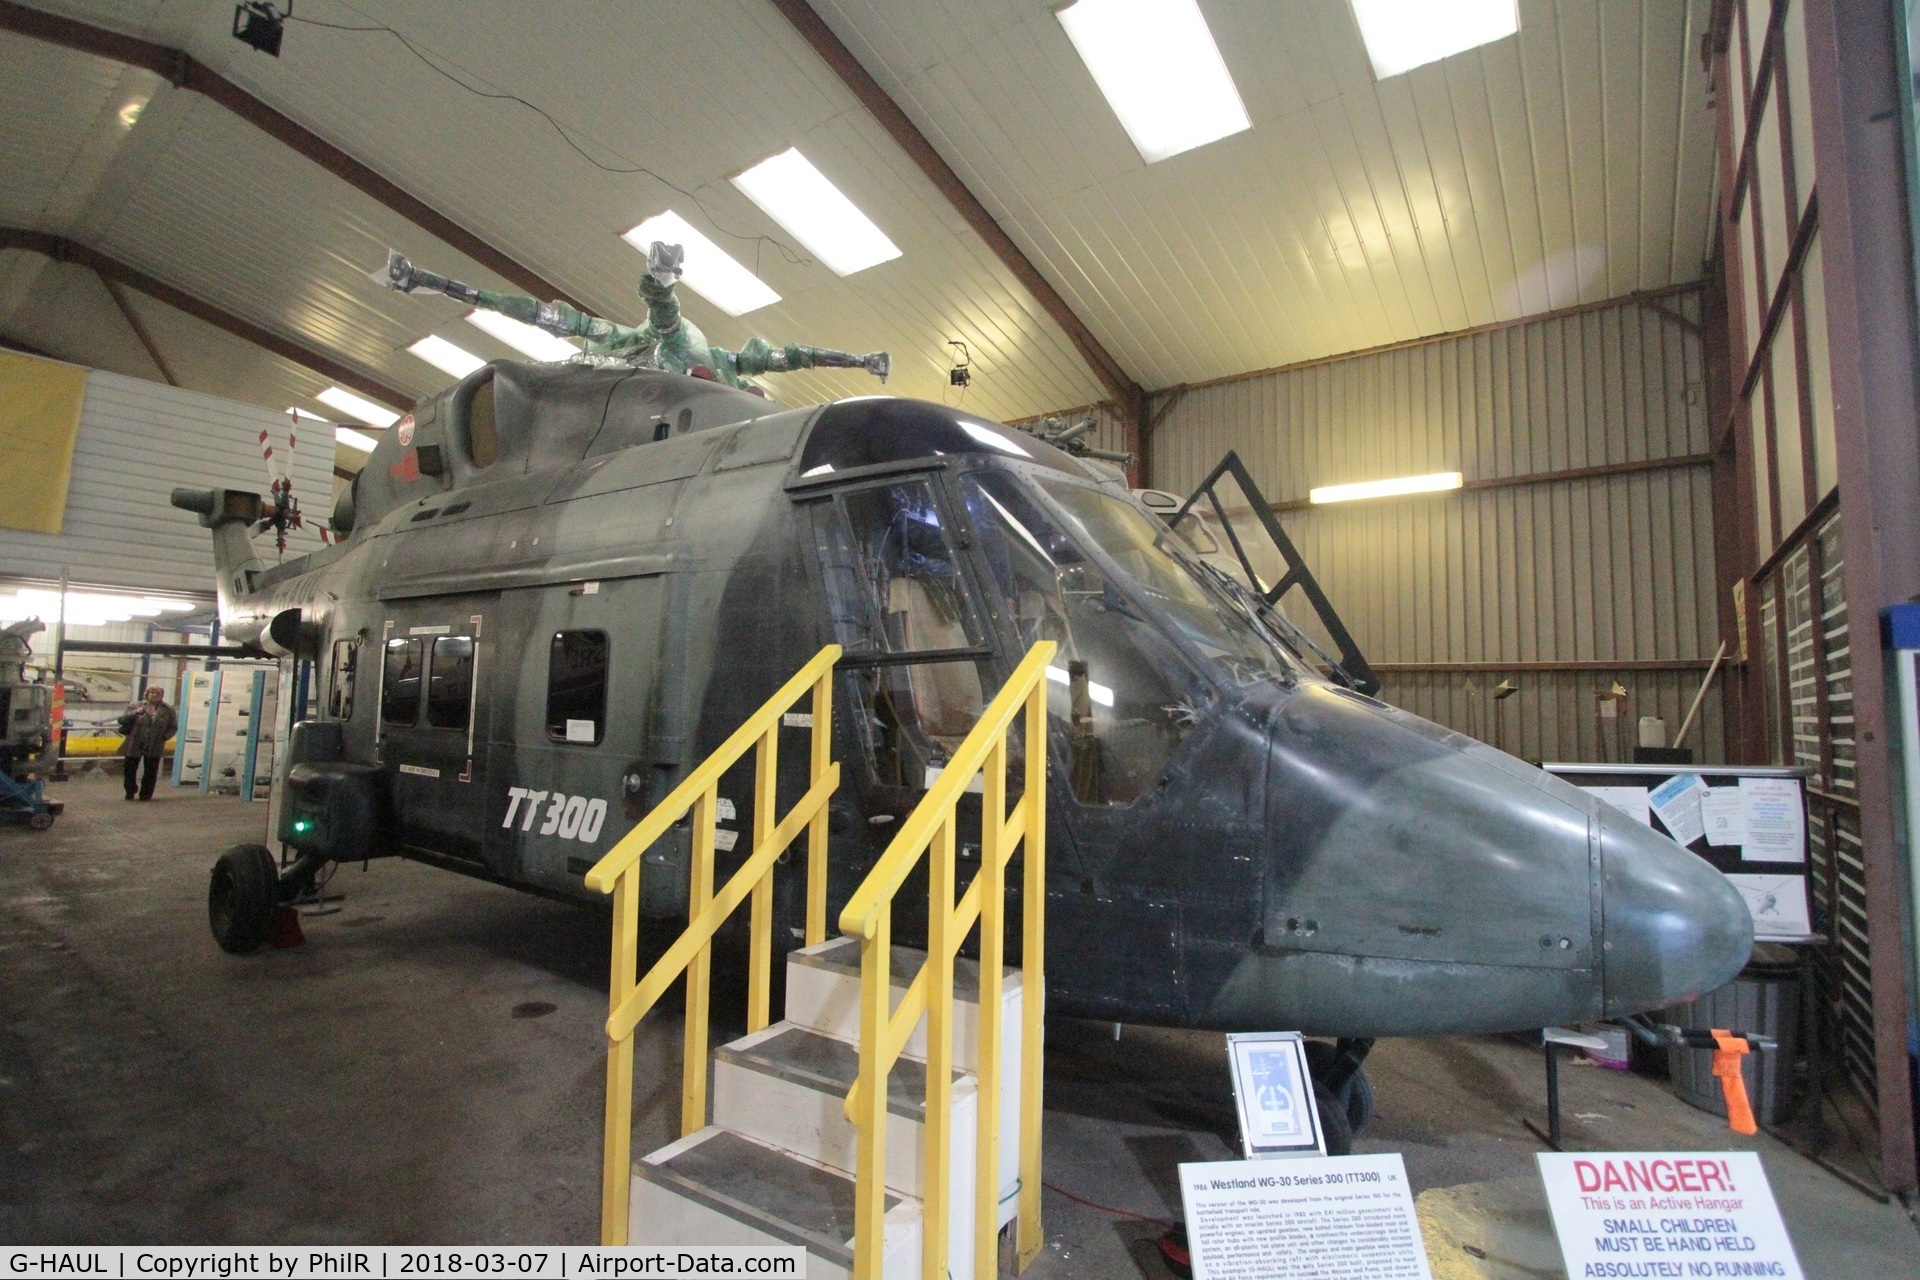 G-HAUL, 1986 Westland WG-30-300 C/N 020, G-HAUL 1986 Westland WG 30-300 Helicopter Museum